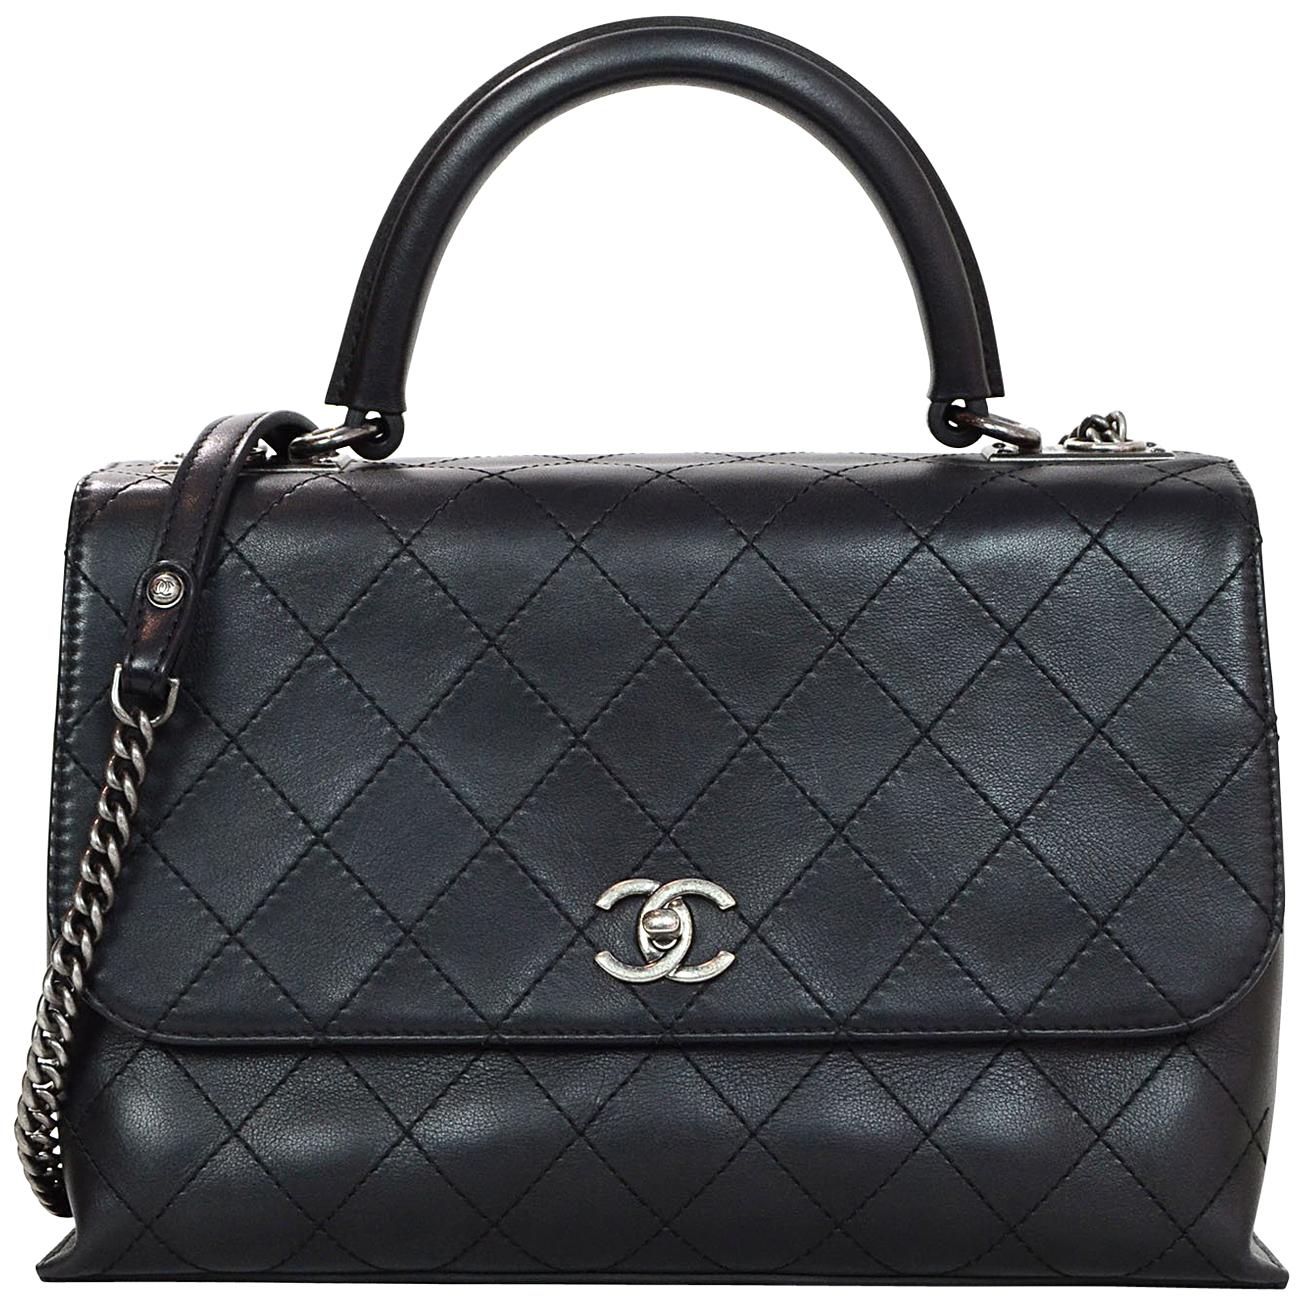 Chanel Black Stitched Urban Calfskin Luxury Top Handle Bag 